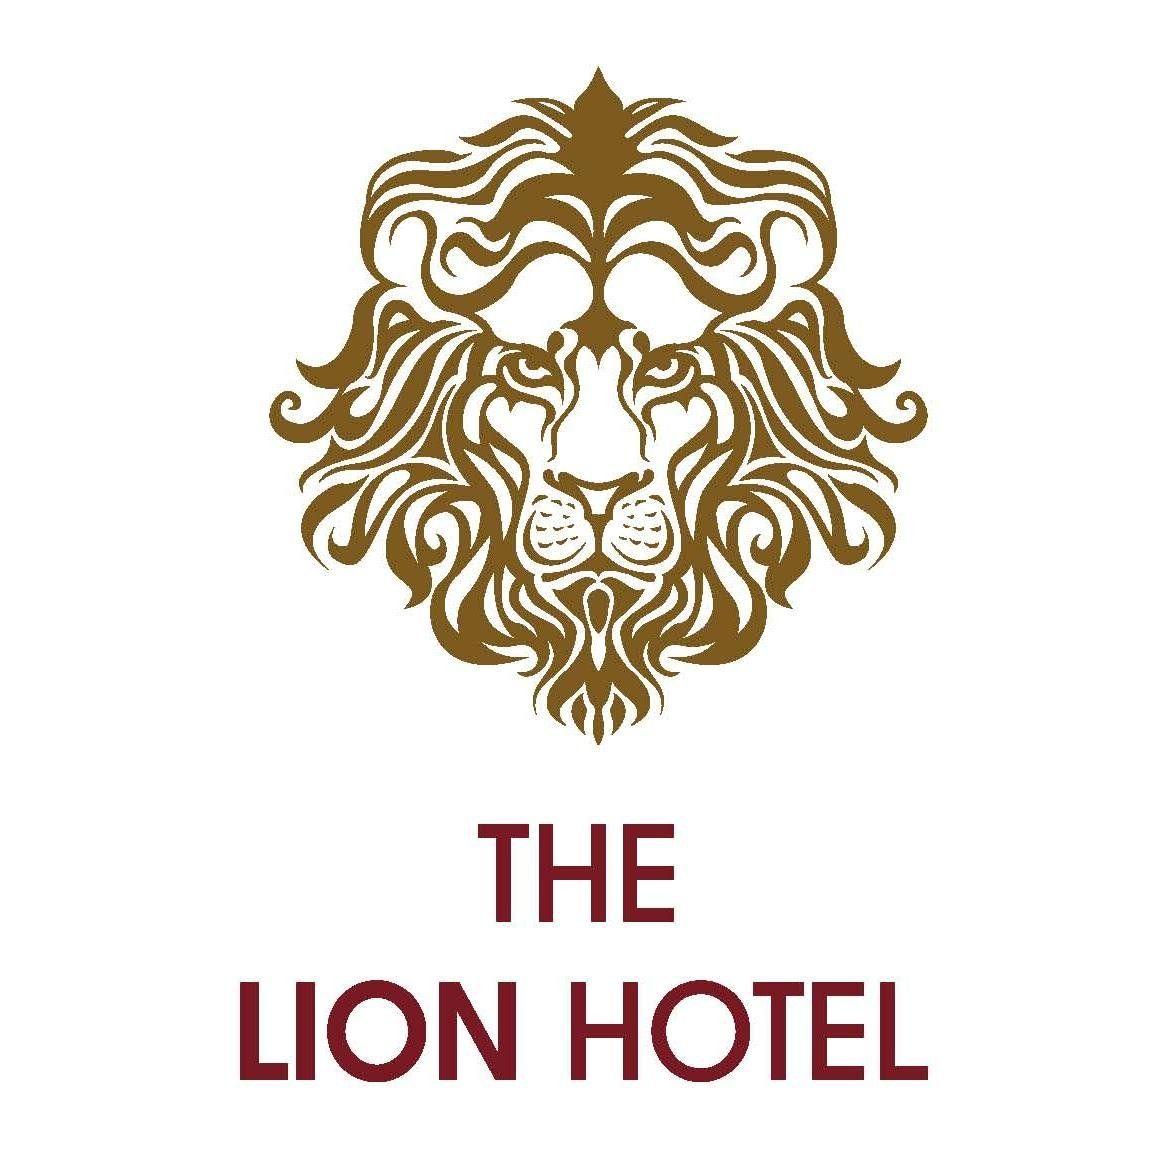 Lion Hotel Logo - The Lion Hotel